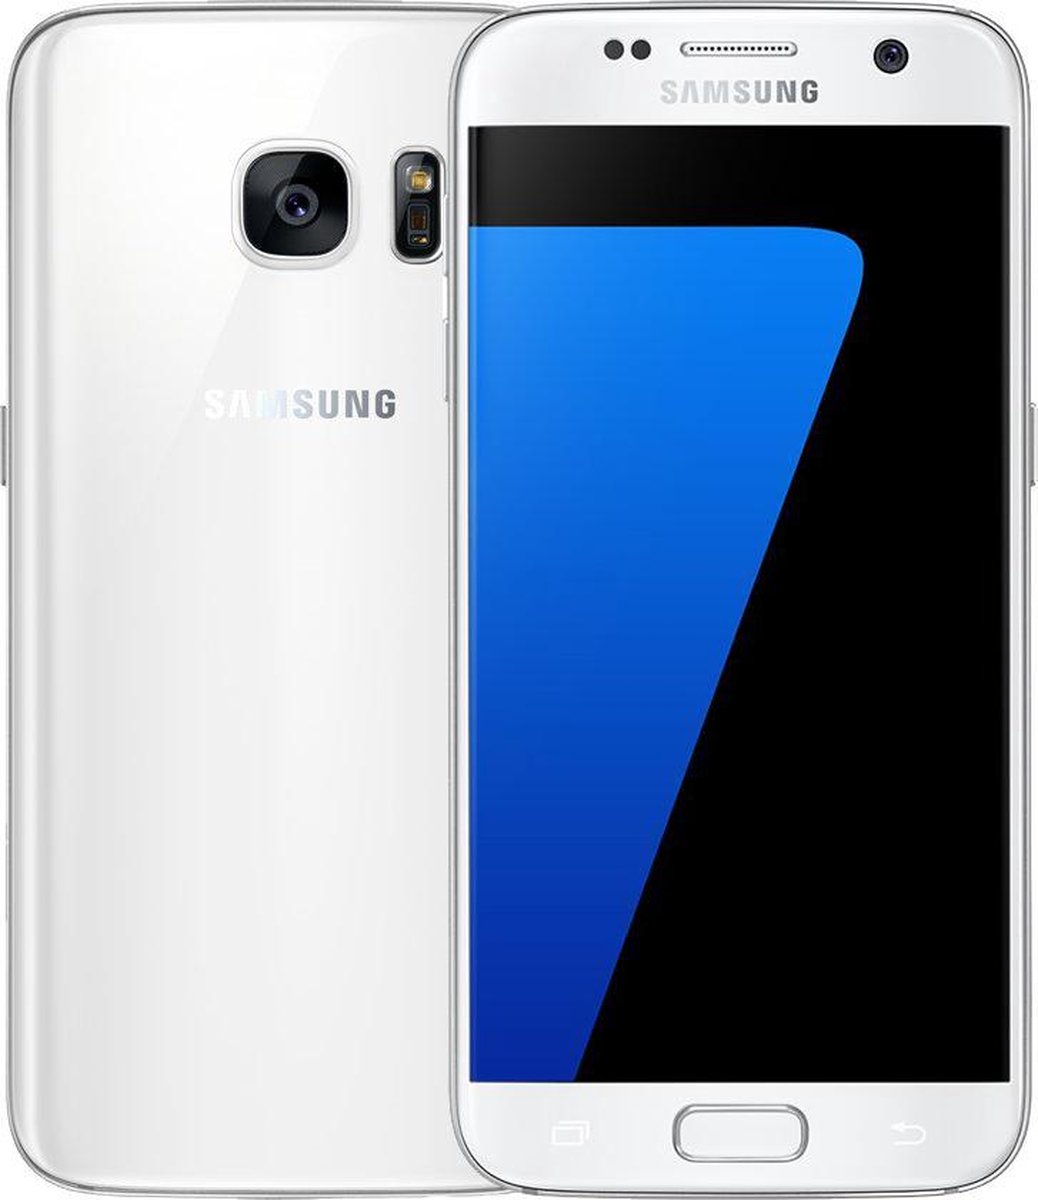 veld Vulkaan Fotoelektrisch Samsung Galaxy S7 - 32GB - Wit | bol.com